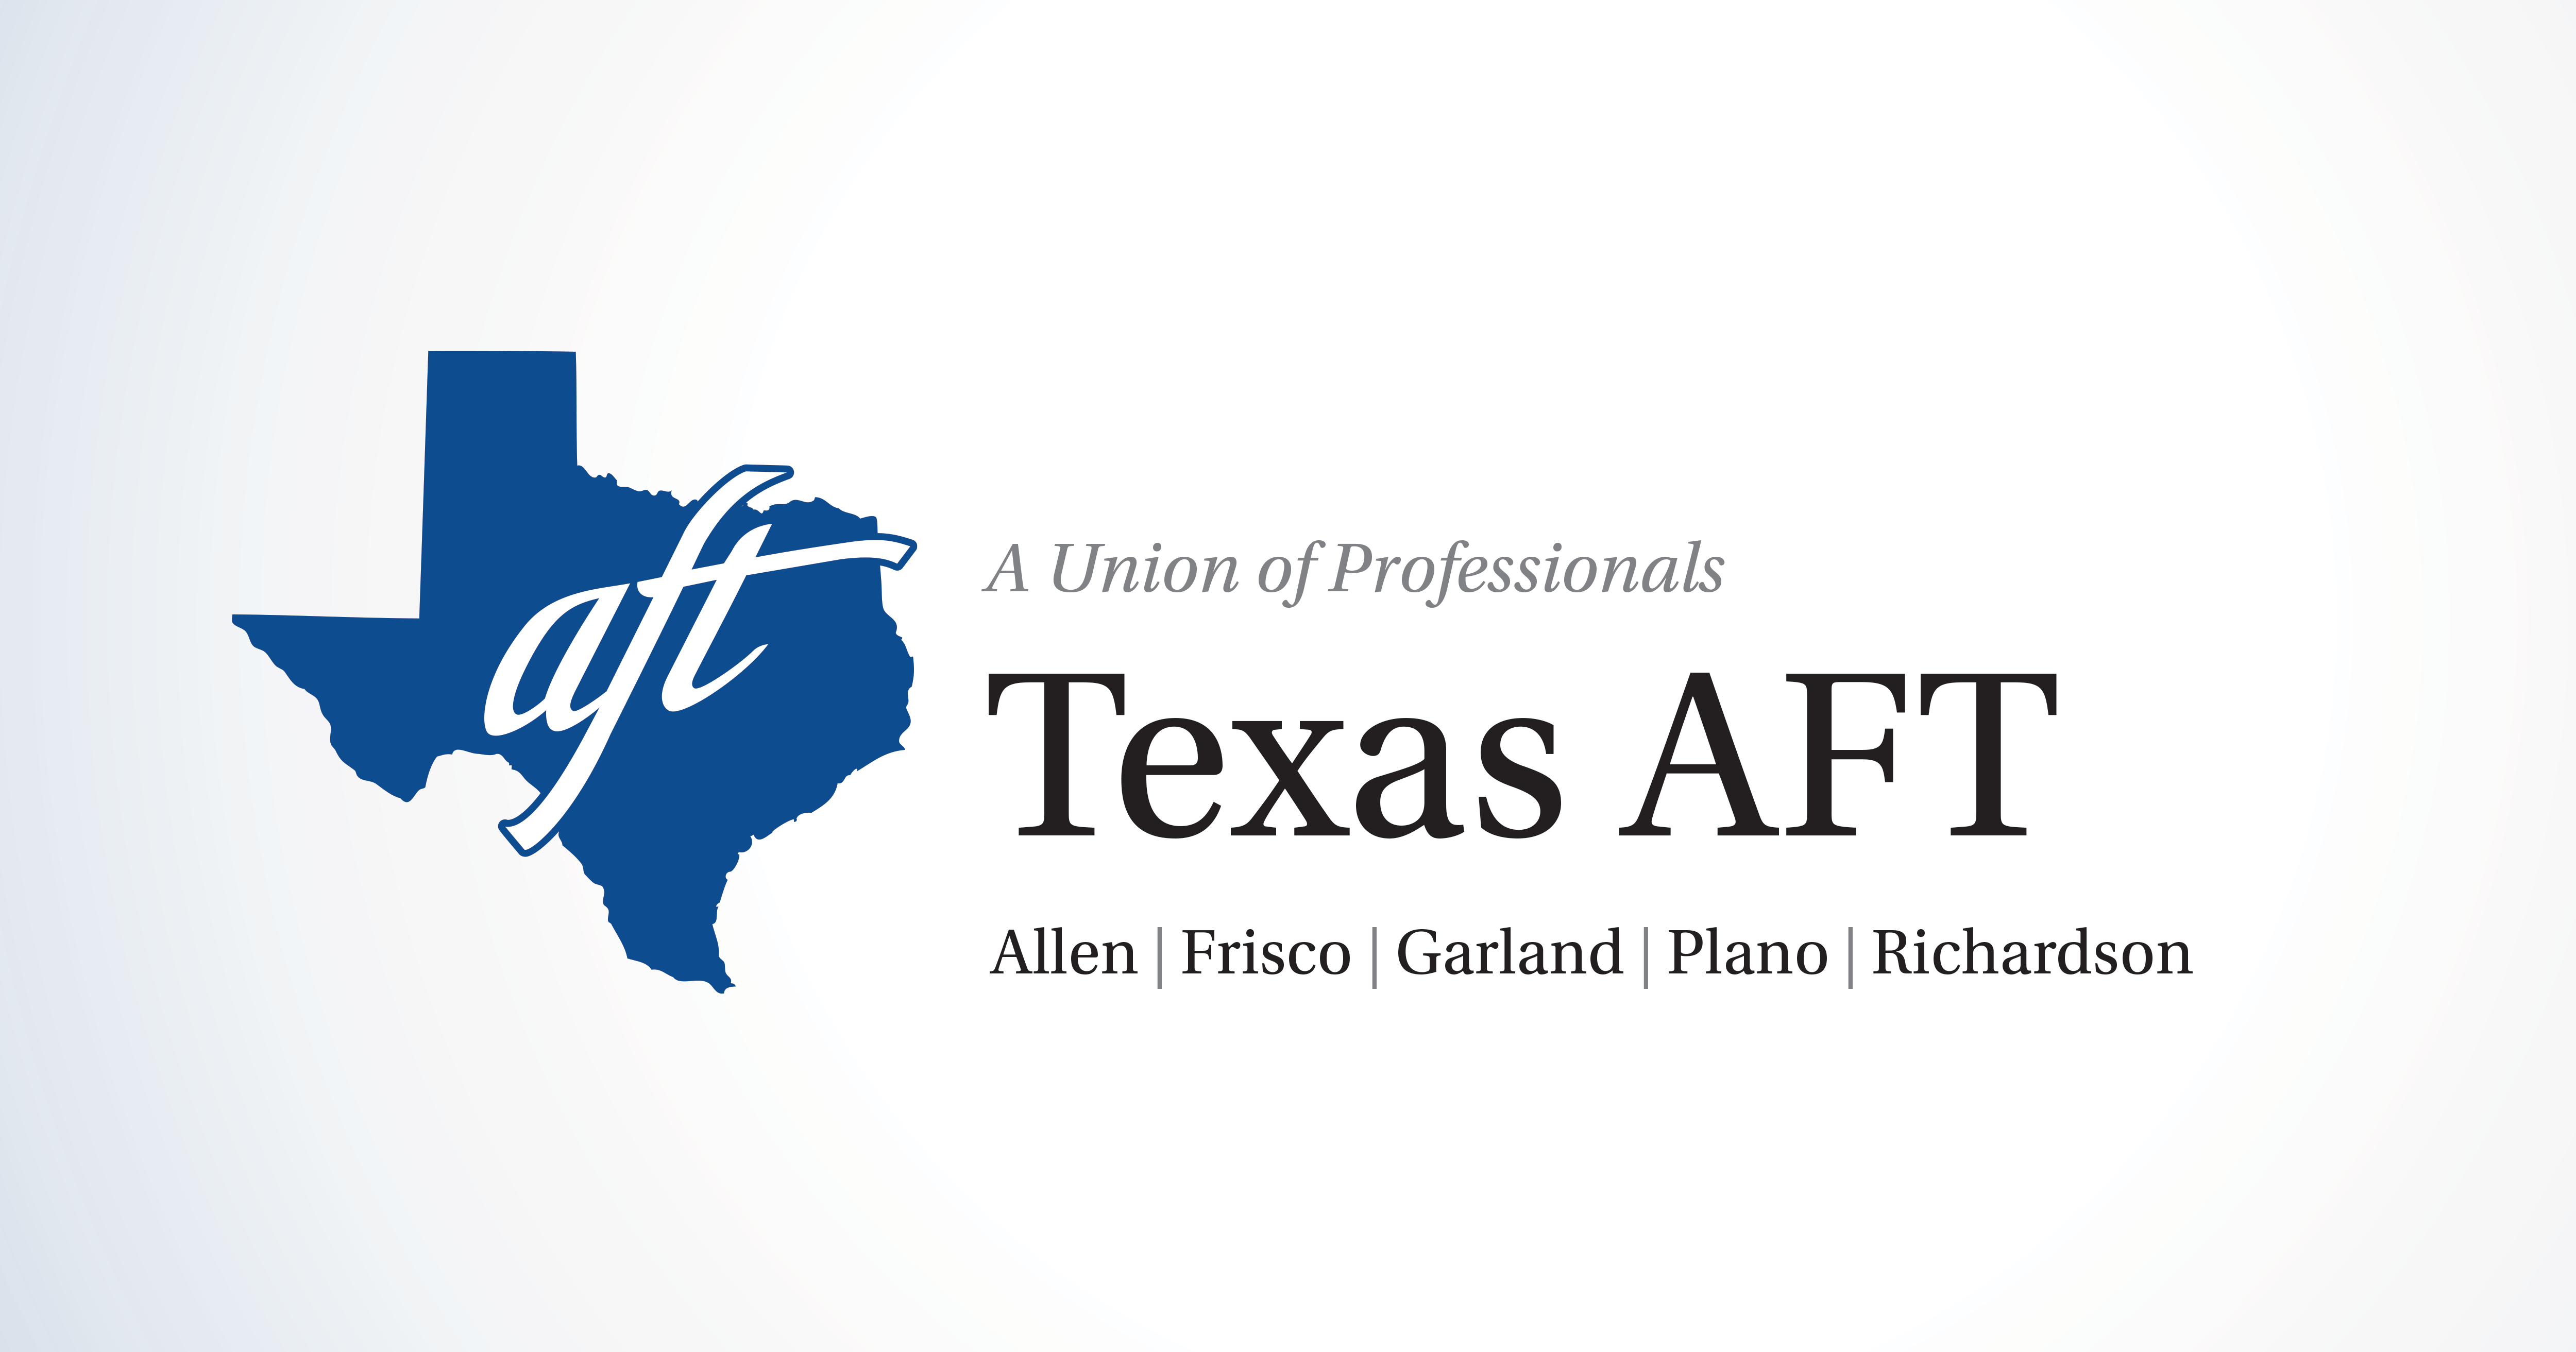 Texas AFT Texas AFT United ‣ Texas AFT